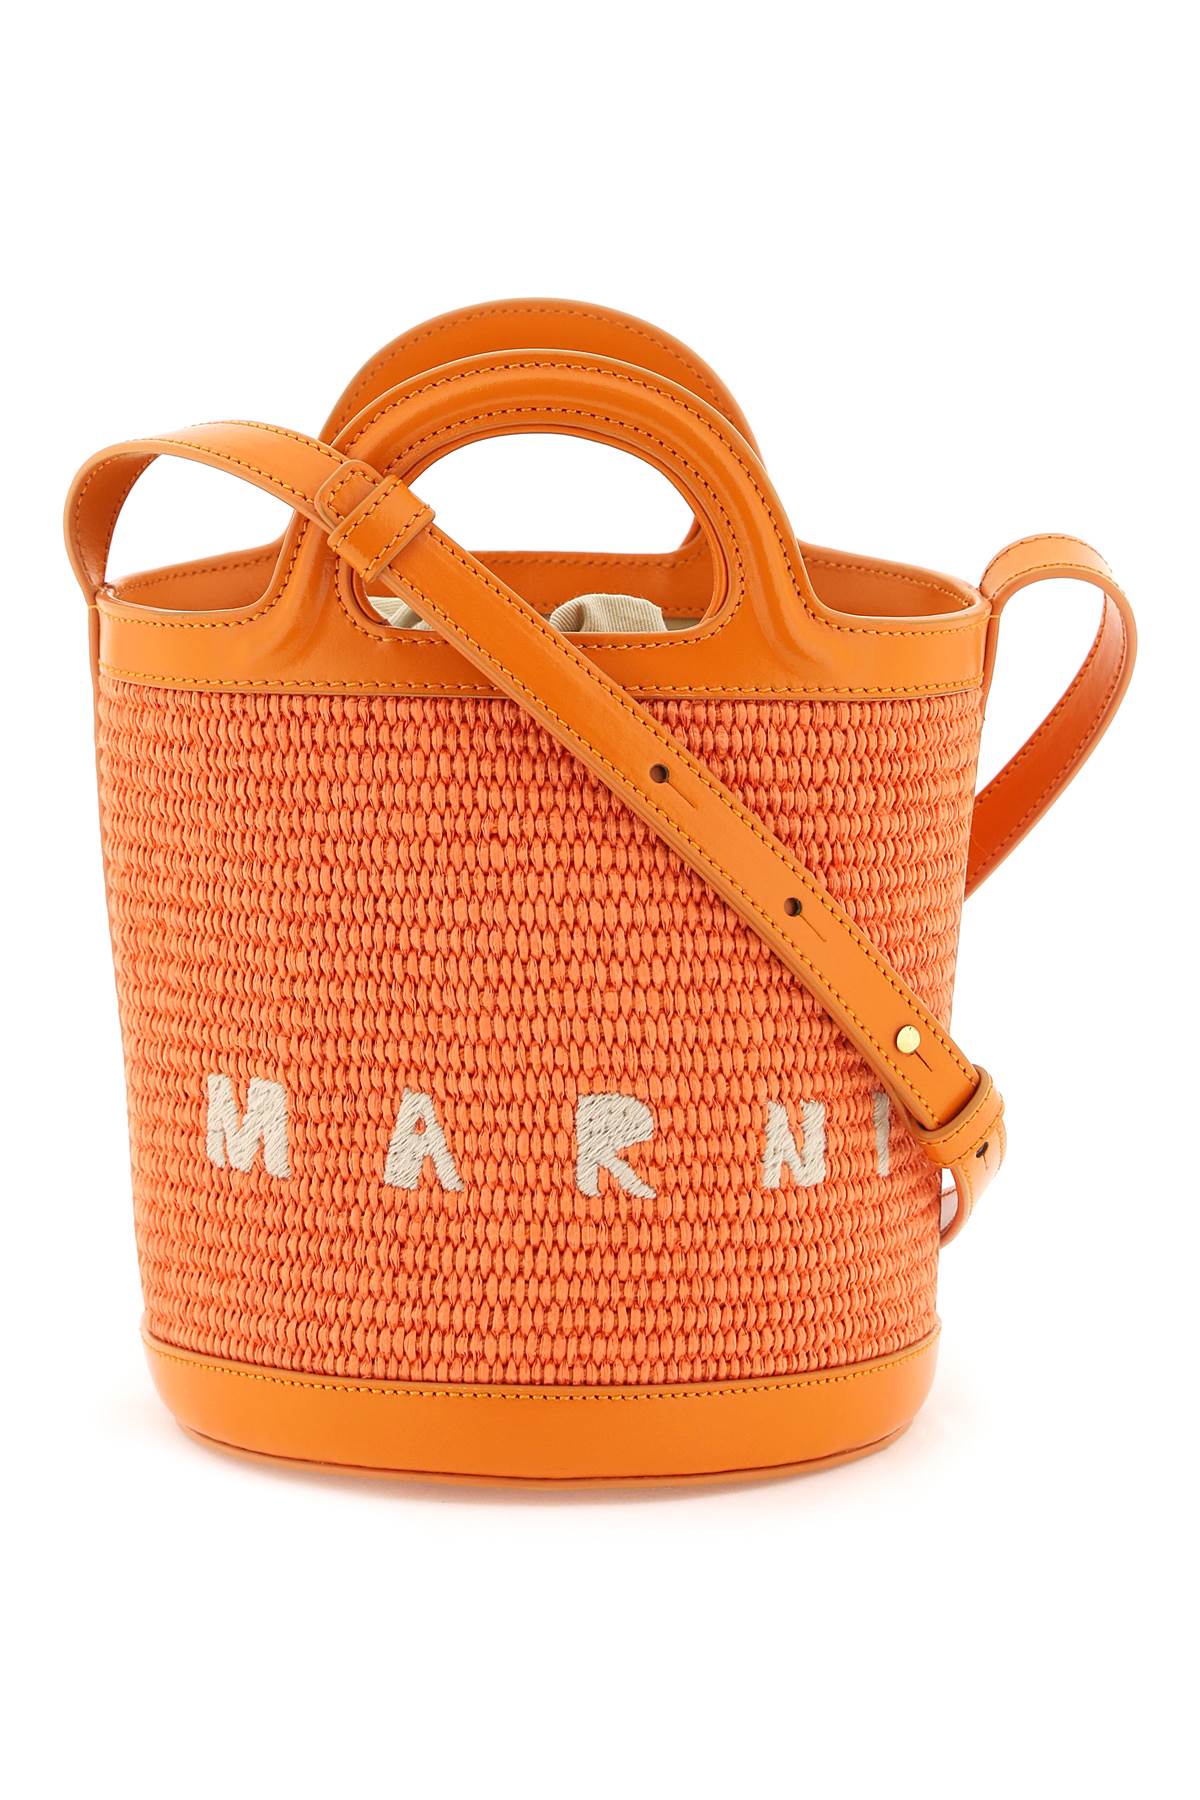 Marni Raffia And Leather Tropicalia Bucket Bag